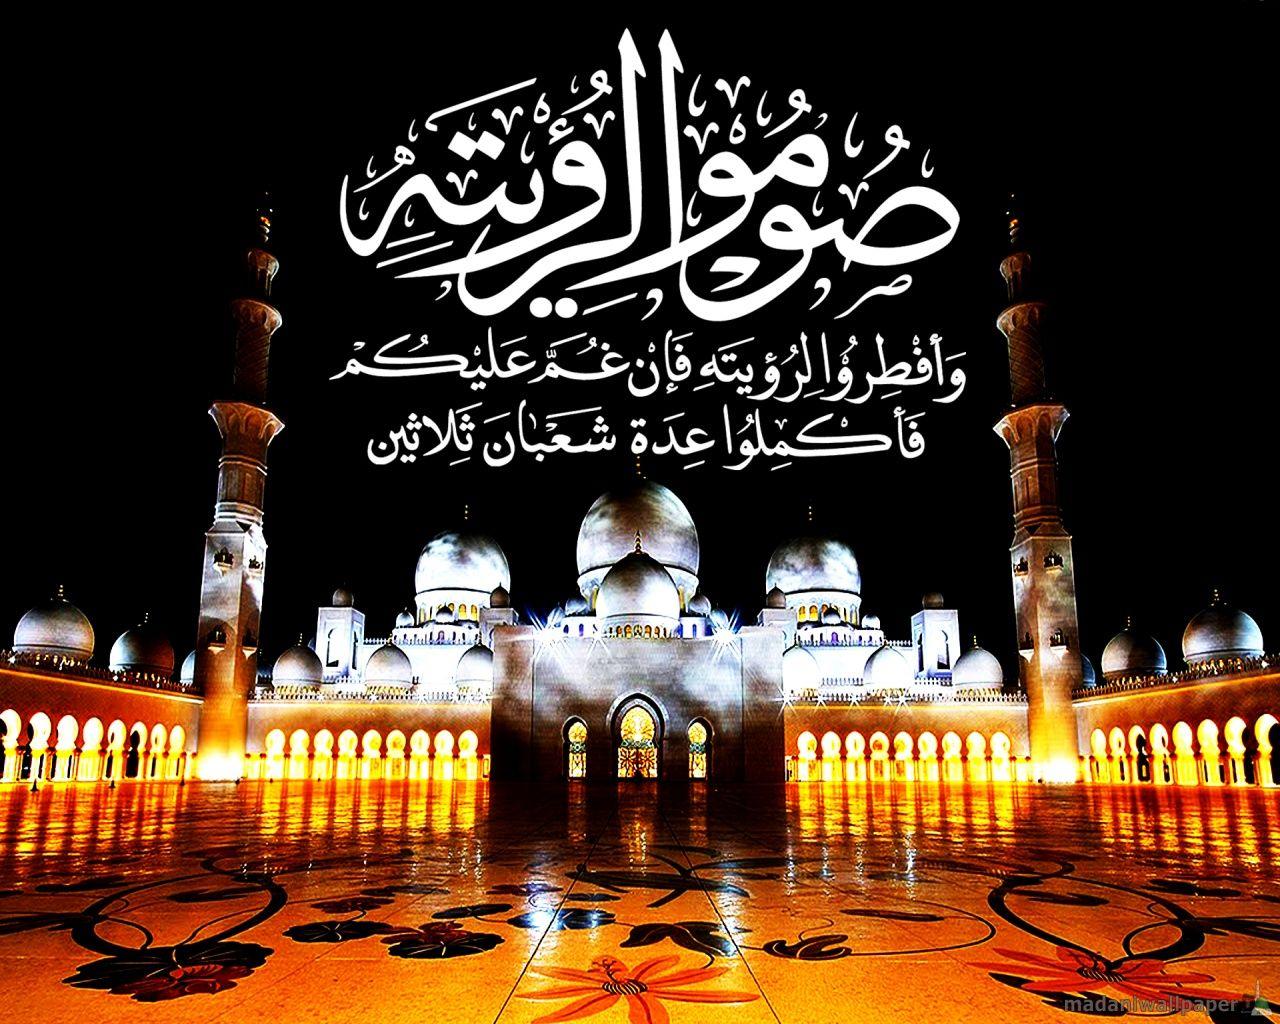 masjiduniq: kaligrafi